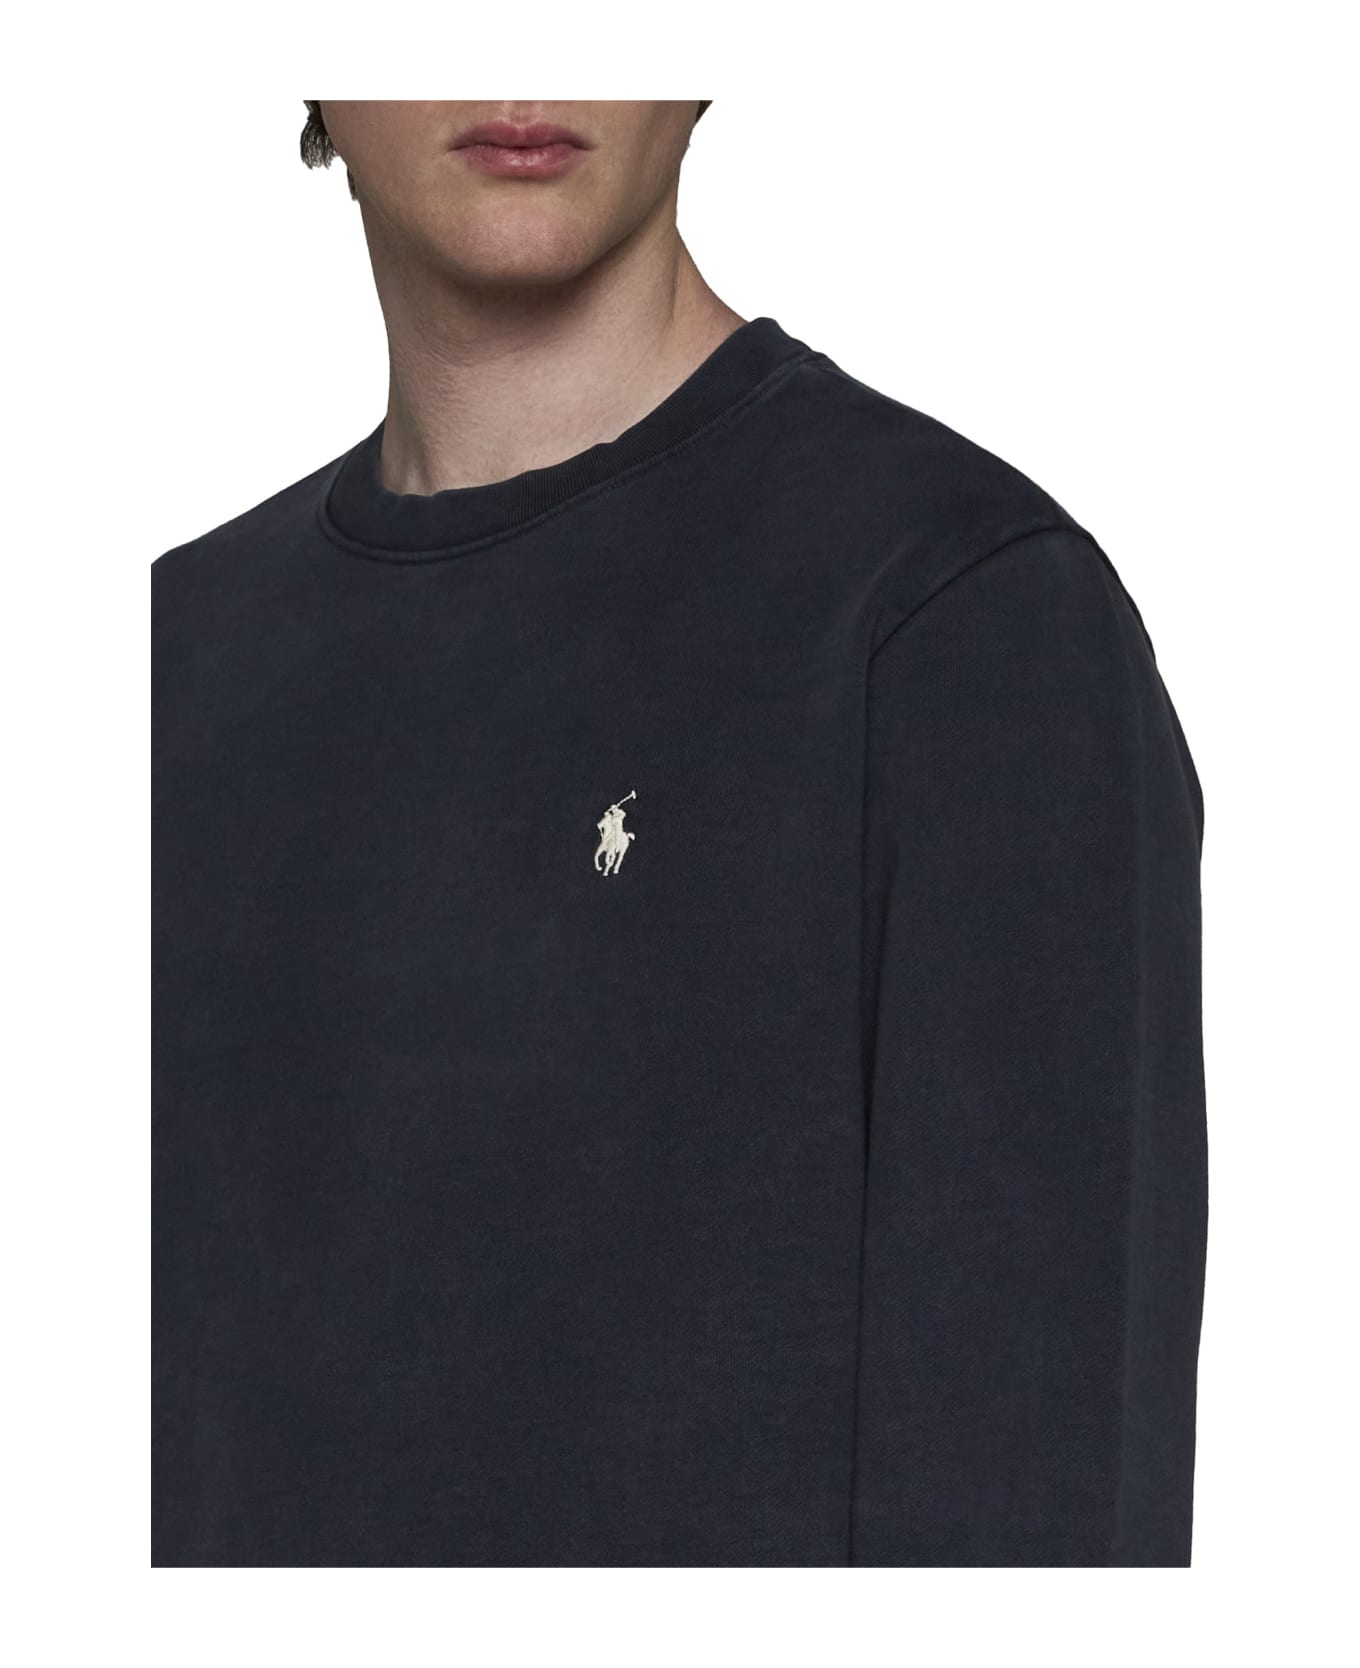 Polo Ralph Lauren Sweater - Faded black canvas